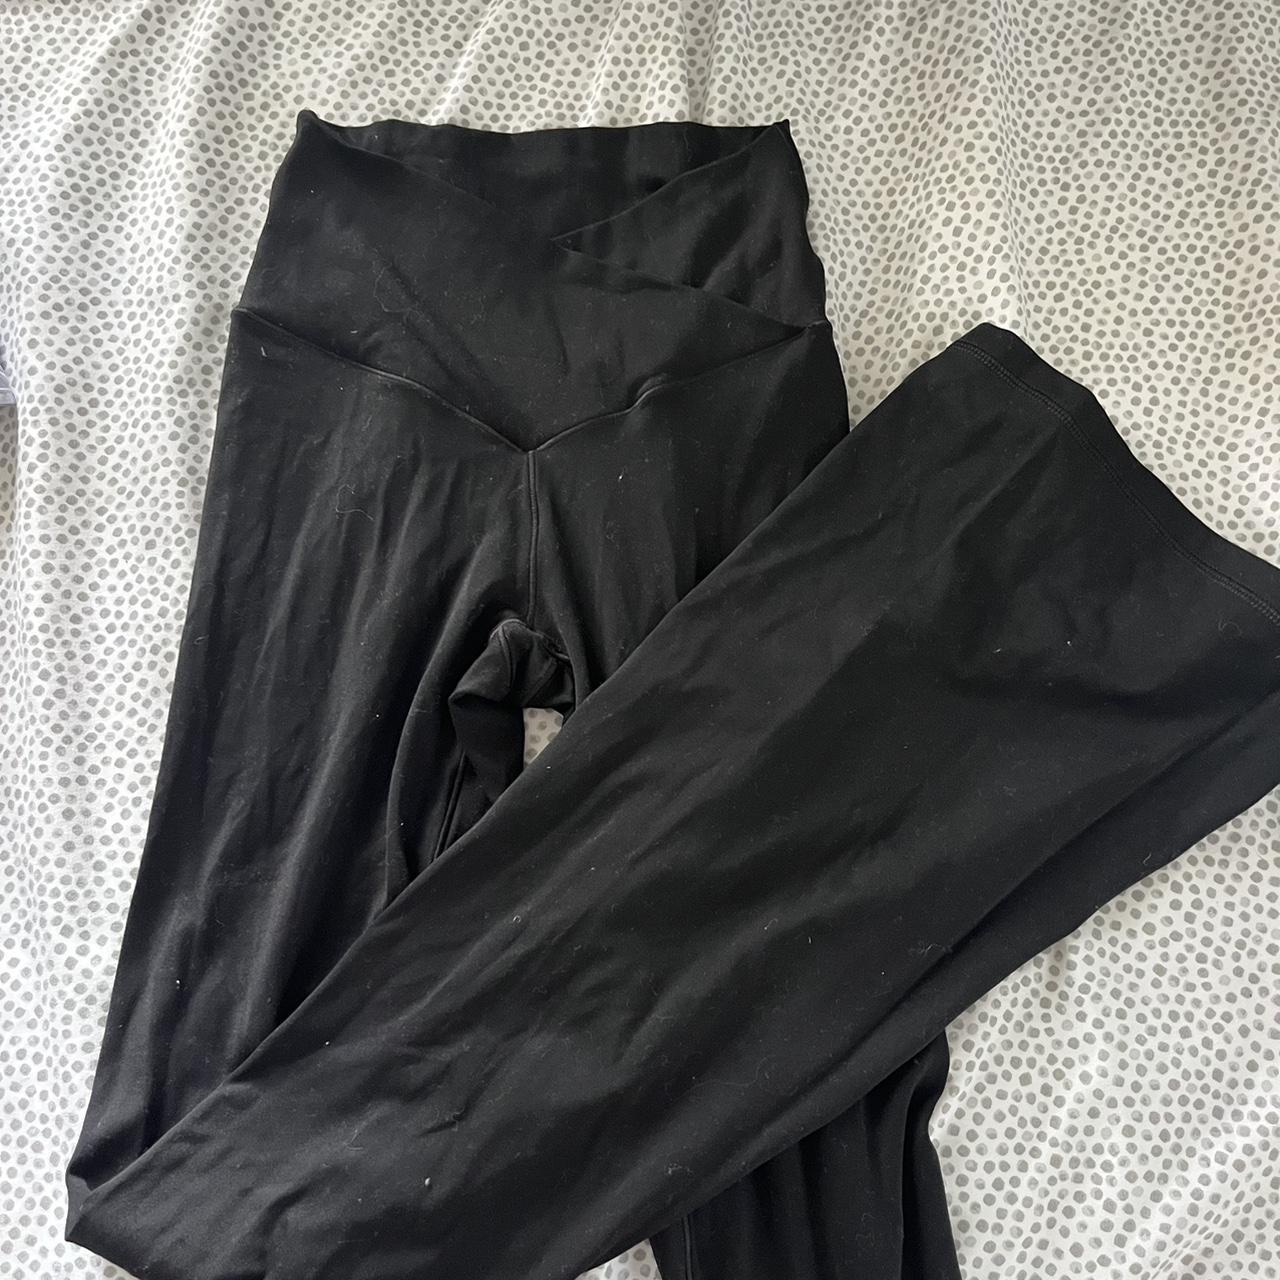 Aerie crossover high waisted black flare leggings - Depop